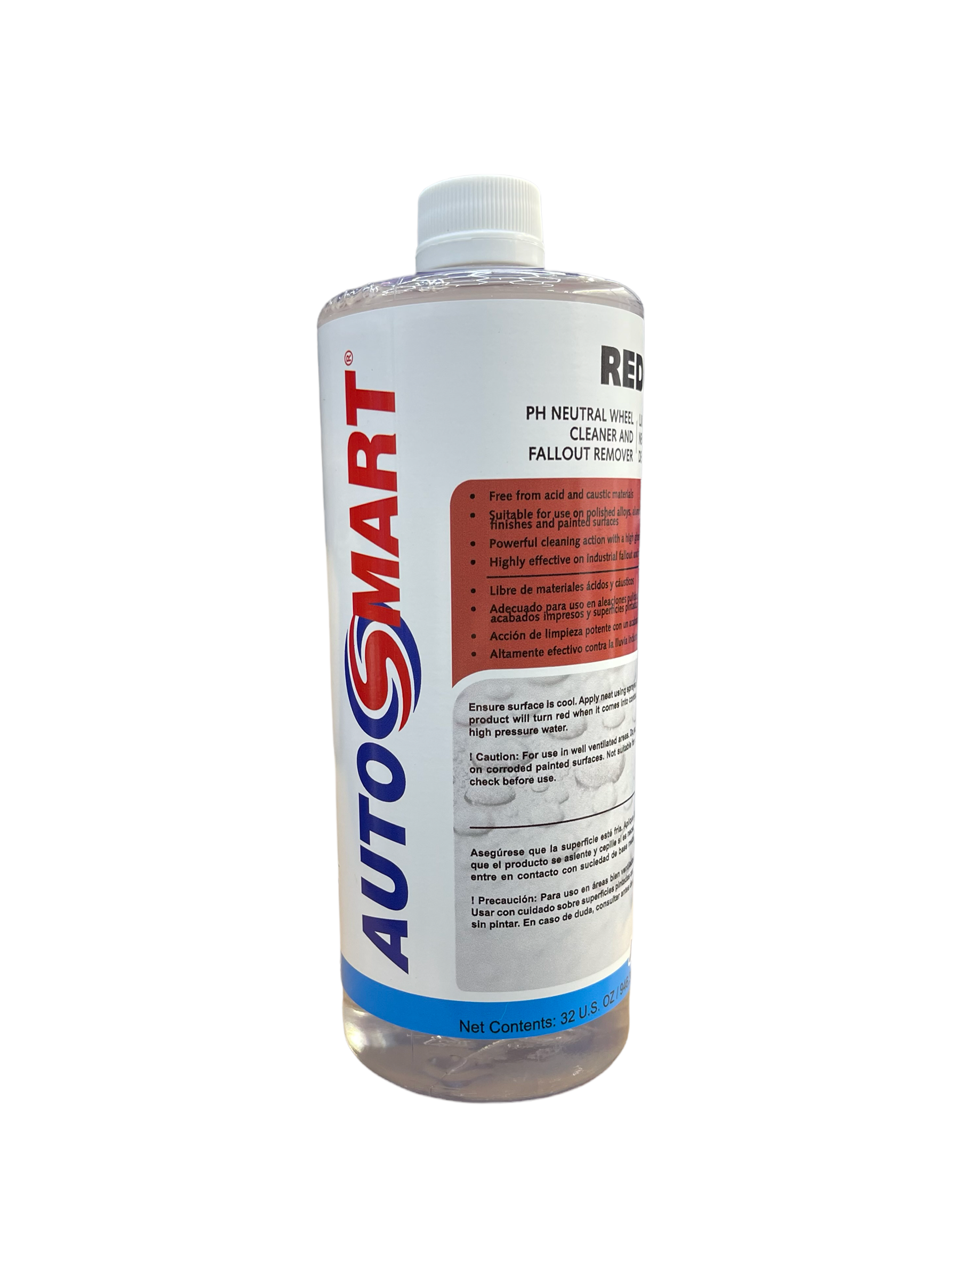 Red 7 - pH Neutral Iron Remover 1qt – Autosmart America